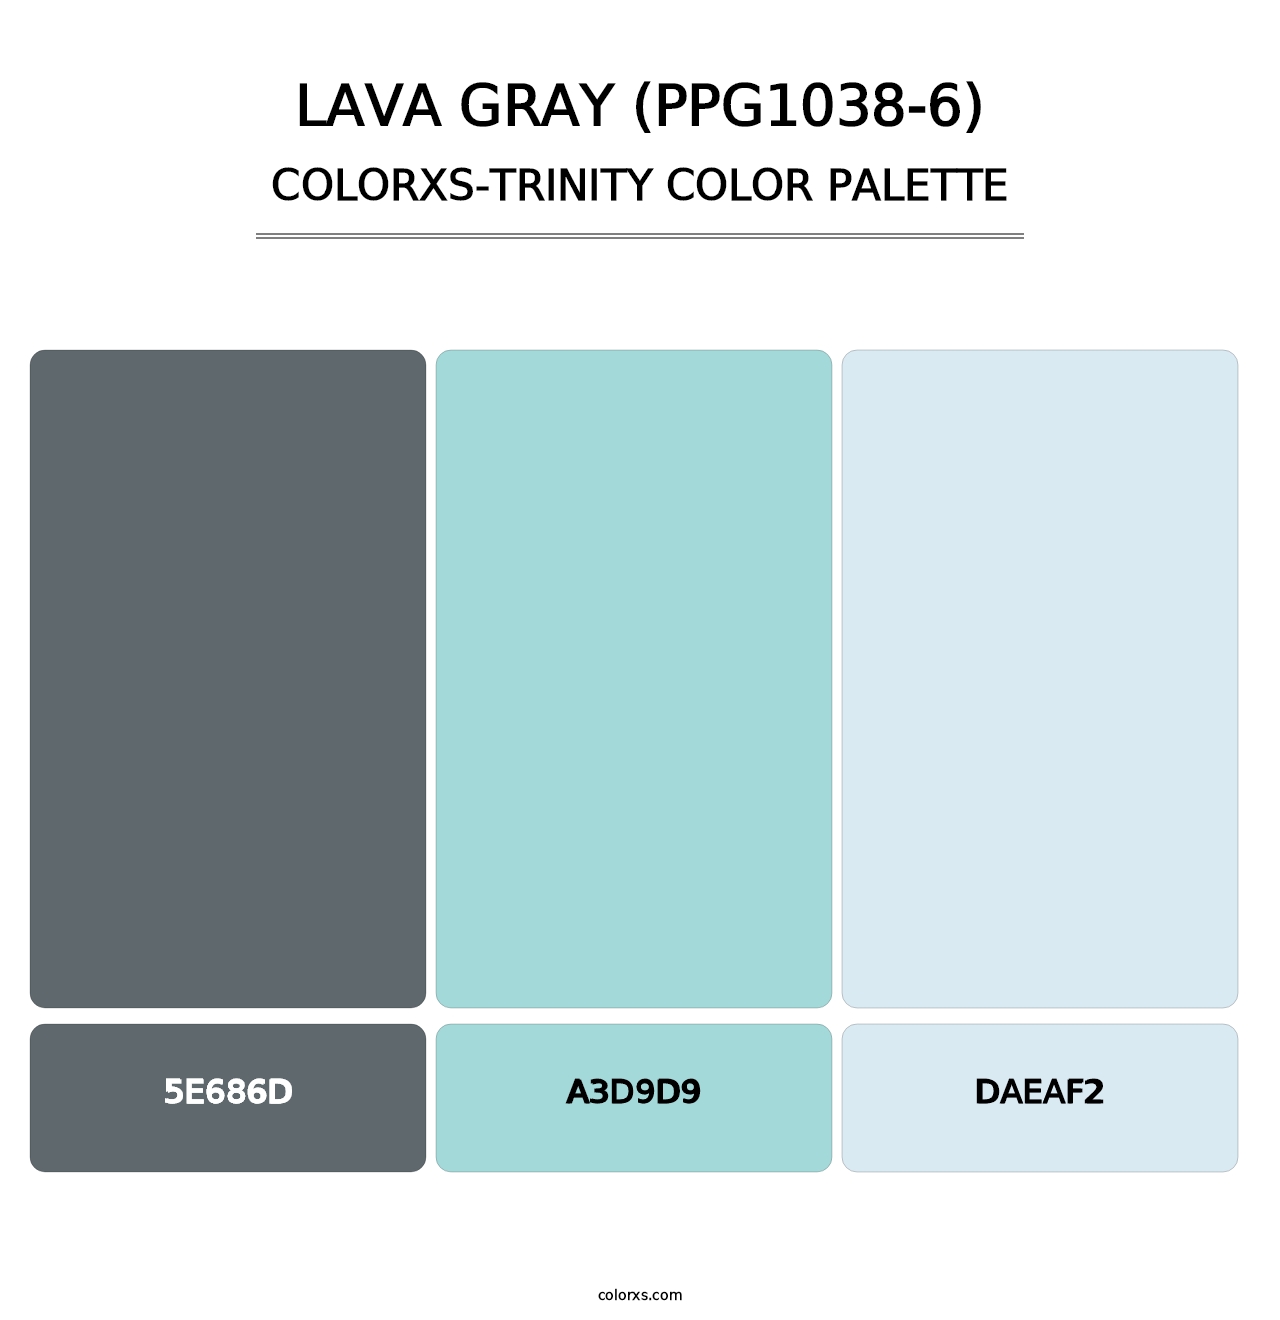 Lava Gray (PPG1038-6) - Colorxs Trinity Palette